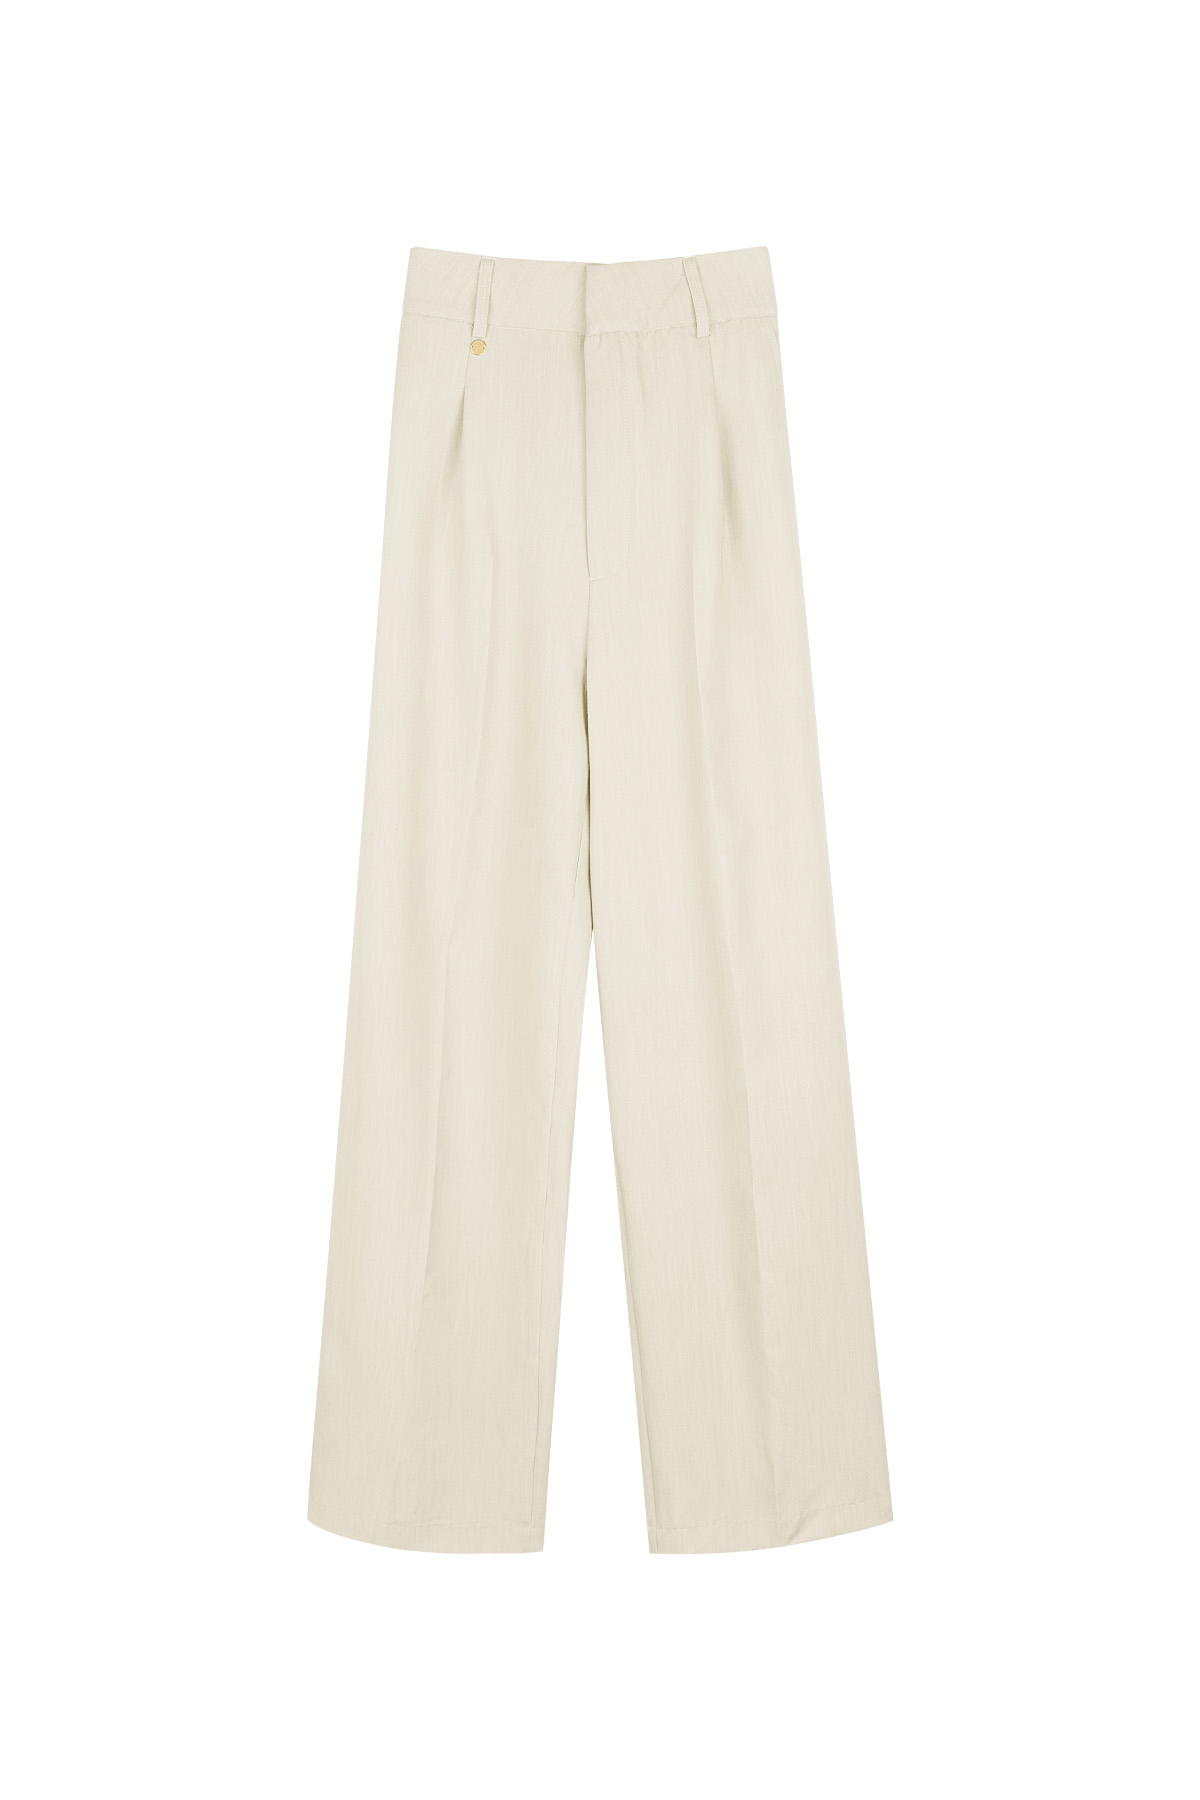 Pilili pantolon - kırık beyaz h5 